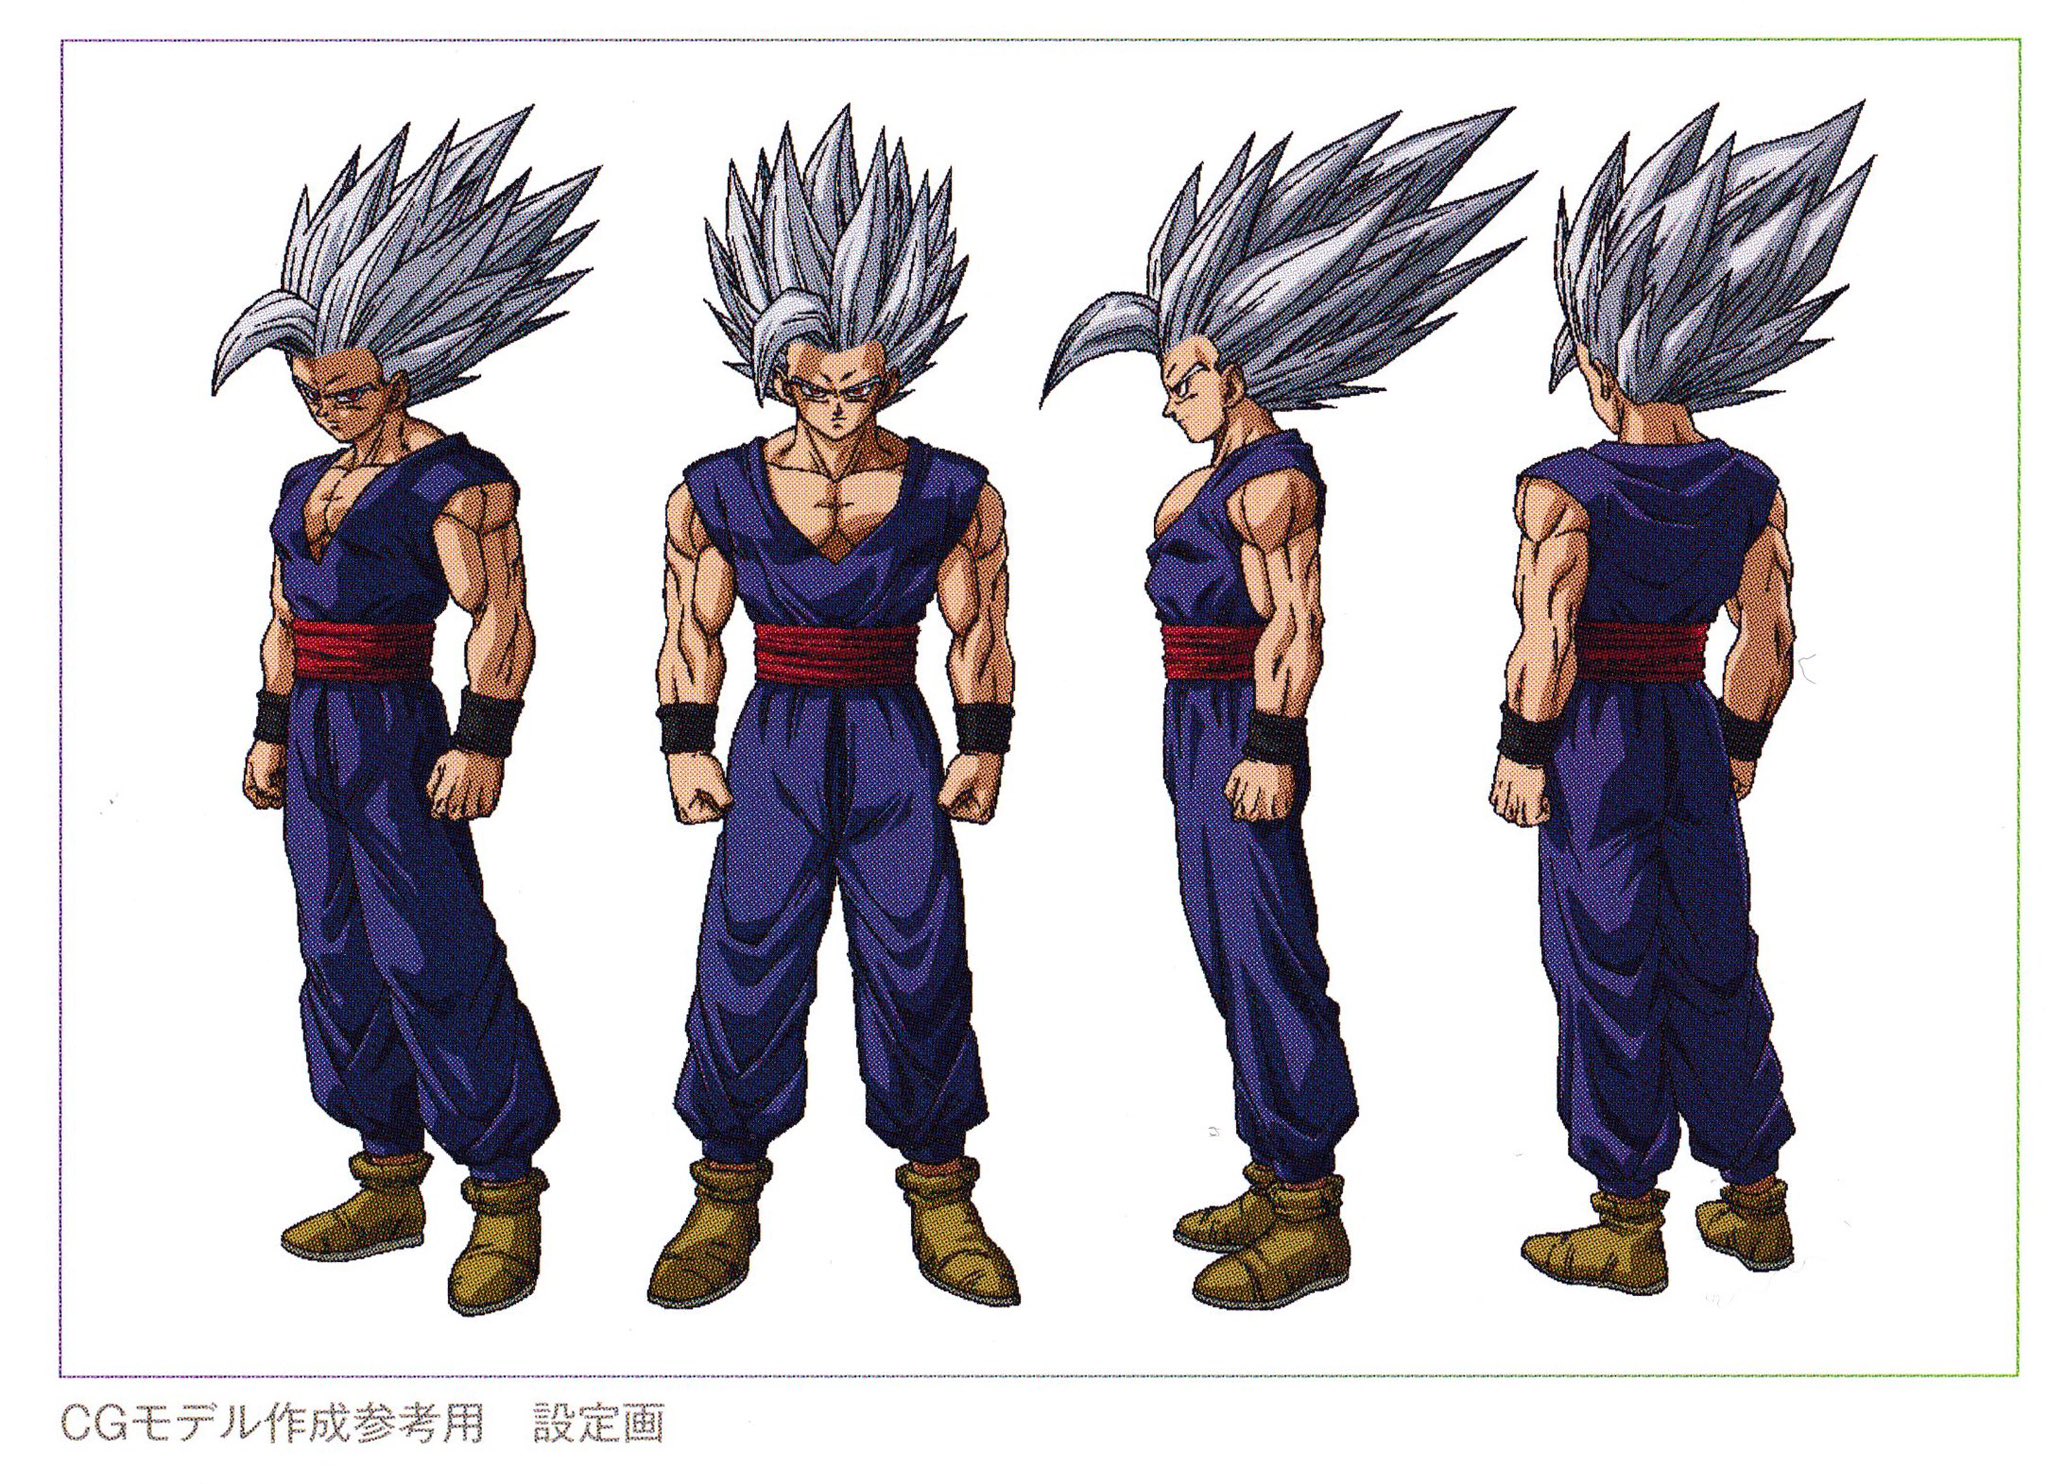 Dragon Ball Super: Super Hero - Why Gohan's Super Saiyan 4 Form is